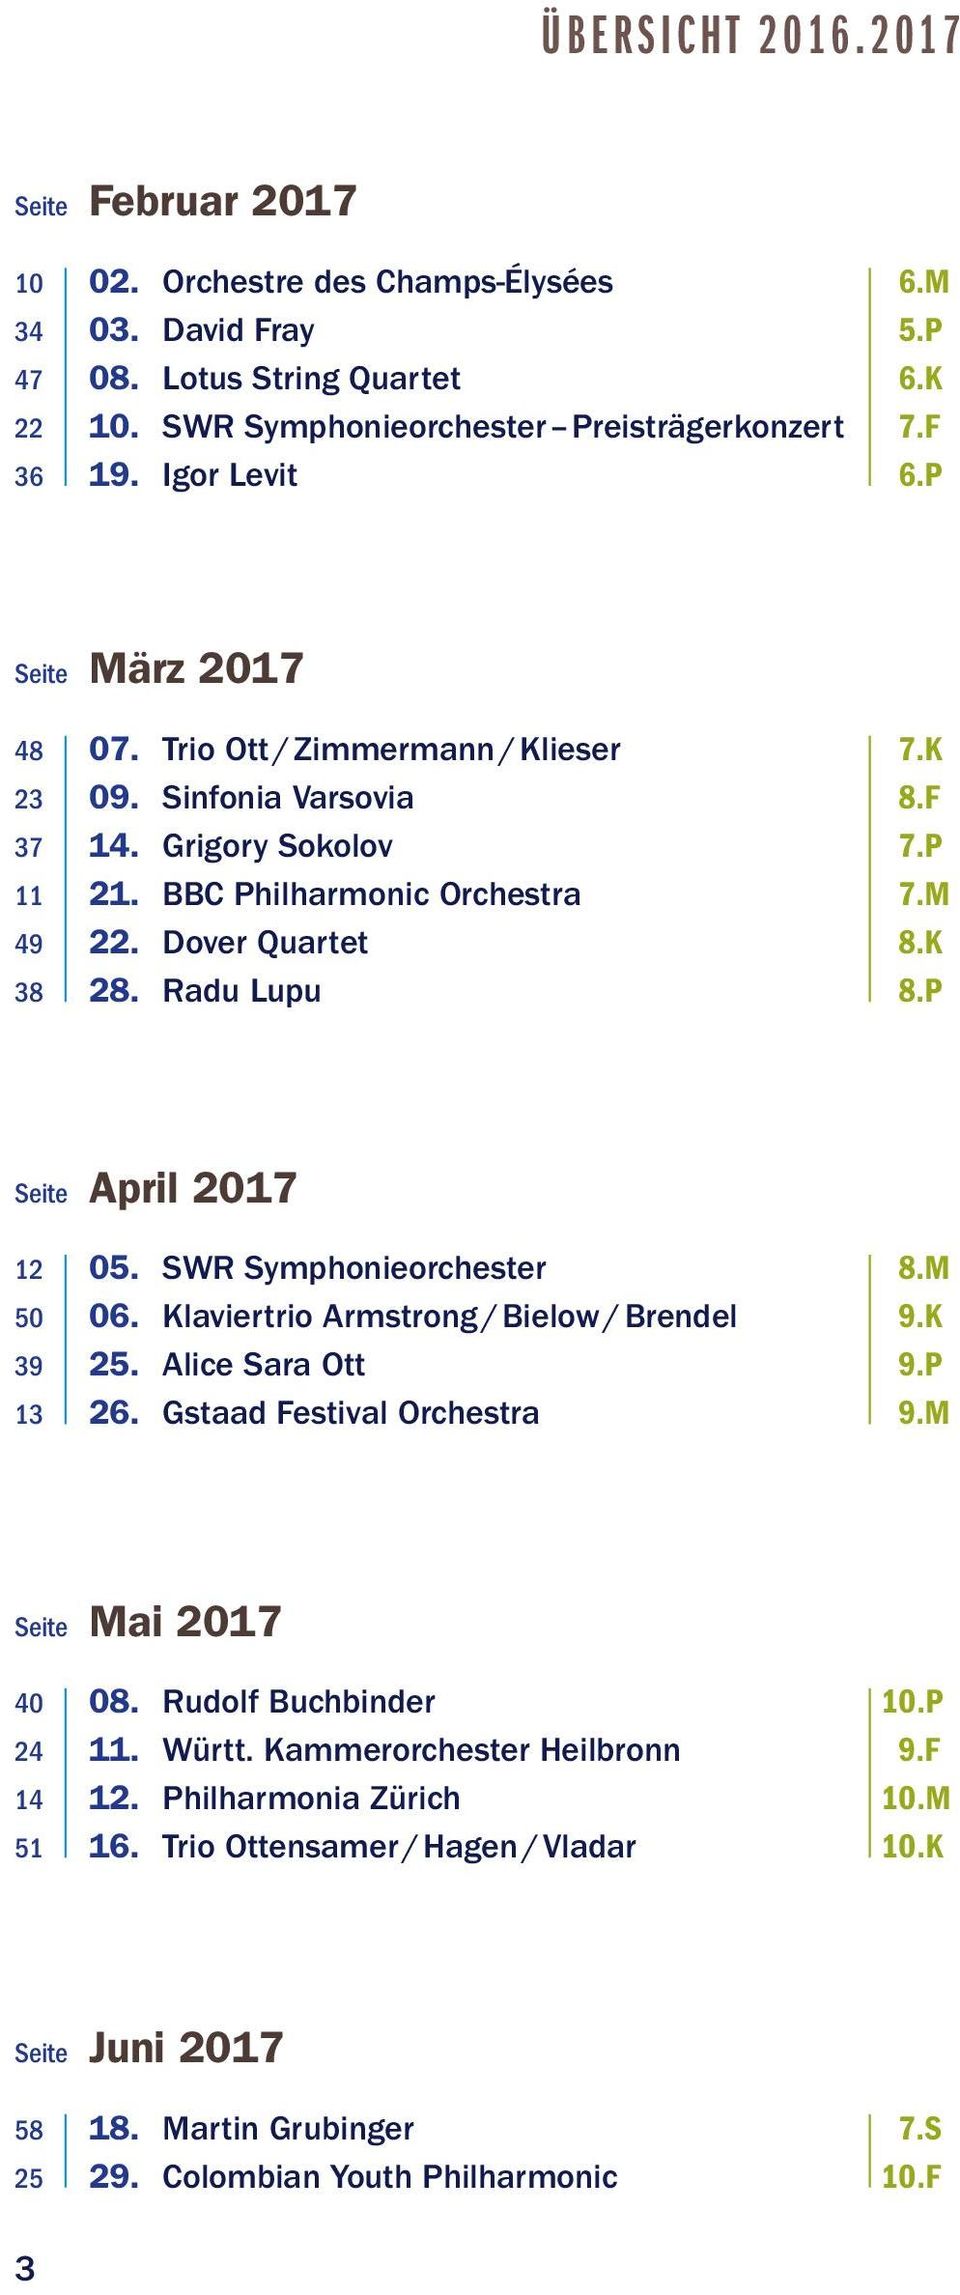 Radu Lupu 8.P Seite April 2017 12 05. SWR Symphonieorchester 8.M 50 06. Klaviertrio Armstrong / Bielow / Brendel 9.K 39 25. Alice Sara Ott 9.P 13 26. Gstaad Festival Orchestra 9.